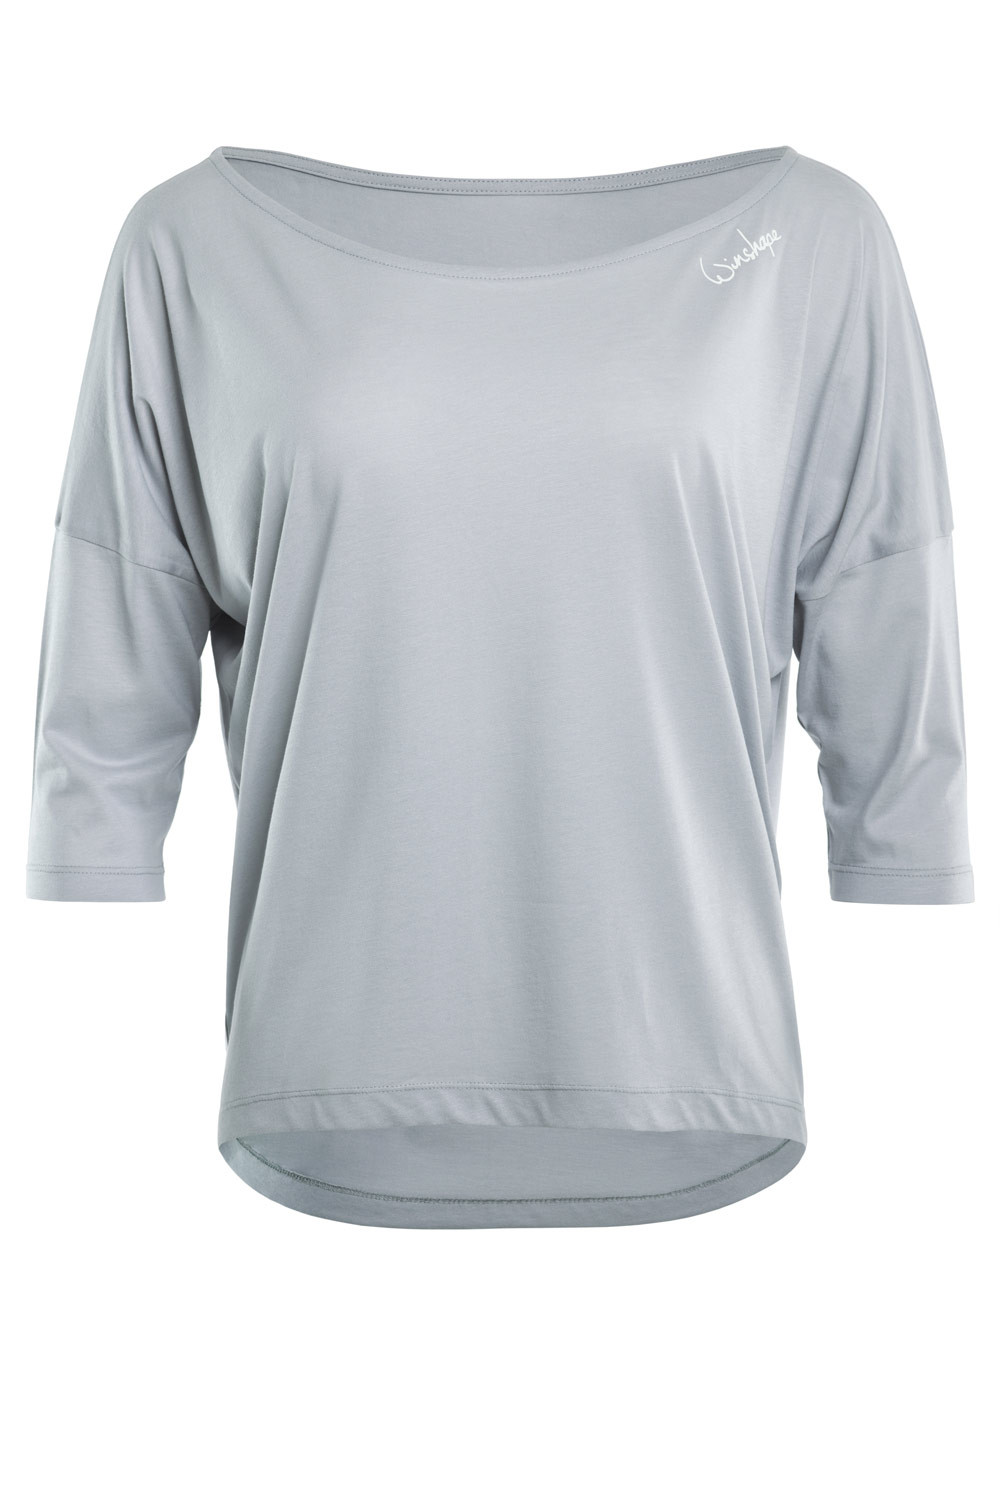 Ultra leichtes Modal-3/4-Arm Shirt Style MCS001, Dance grey, cool Winshape